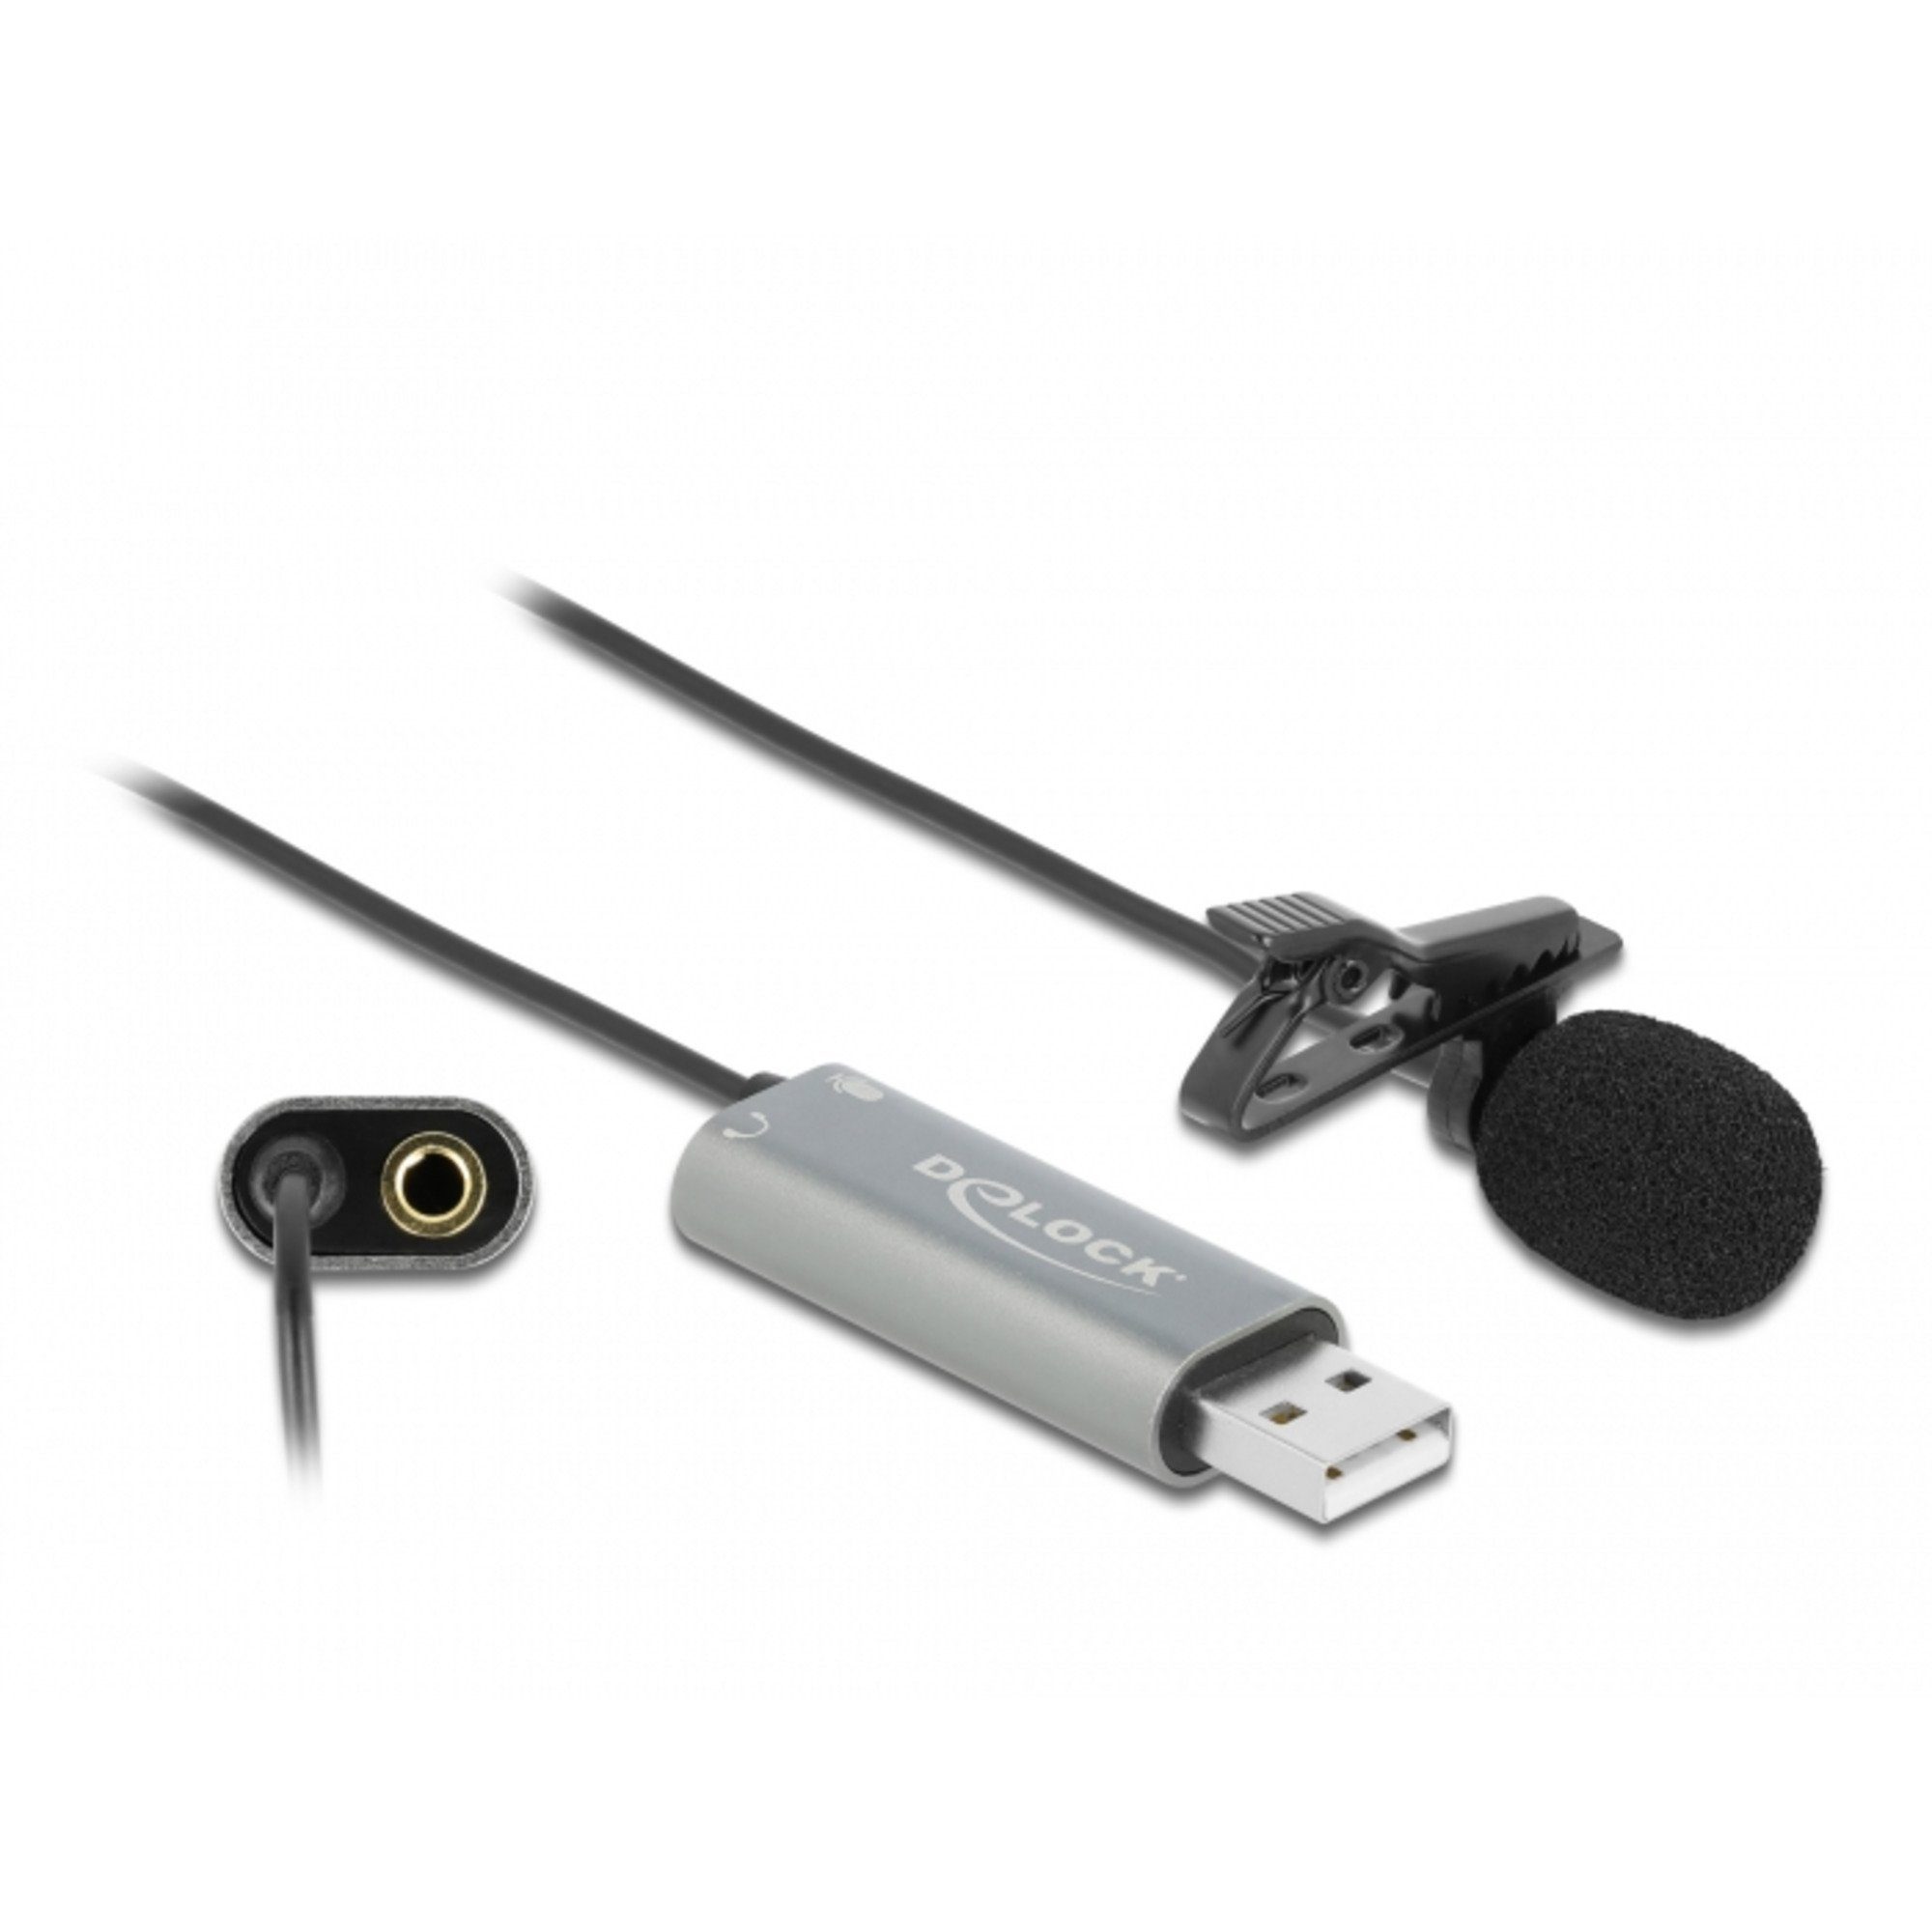 Delock DeLOCK USB Krawatten Mikrofon, (Klinke) Gaming-Headset